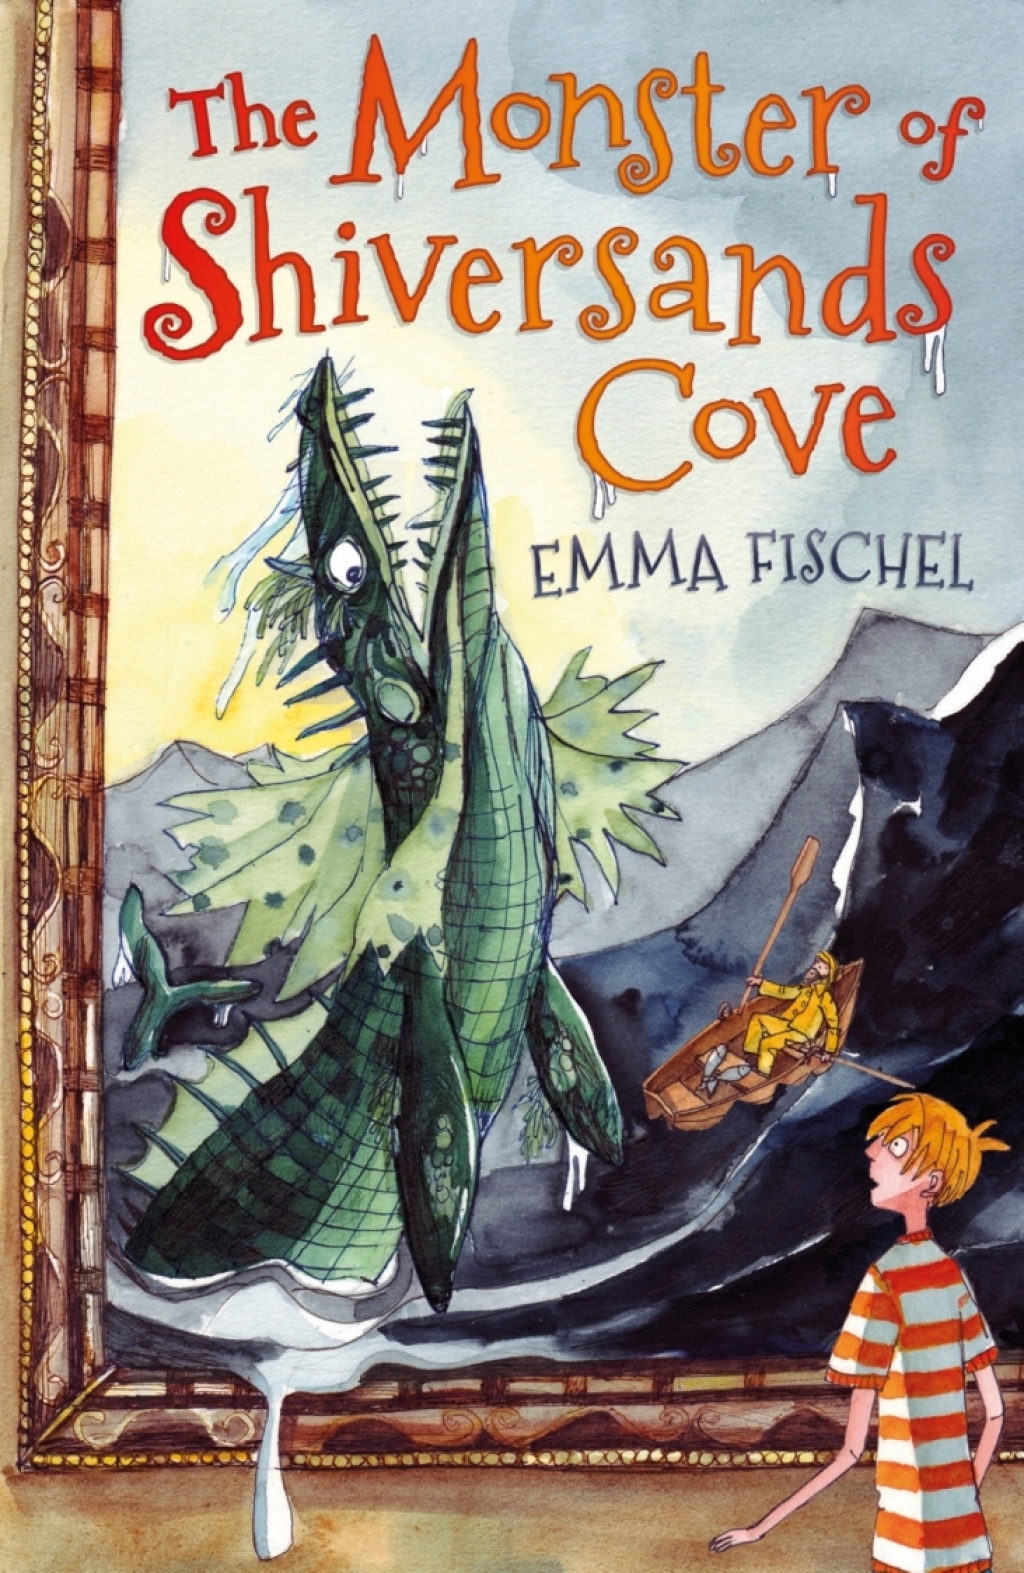 The Monster of Shiversands Cove (eBook) - Emma Fischel